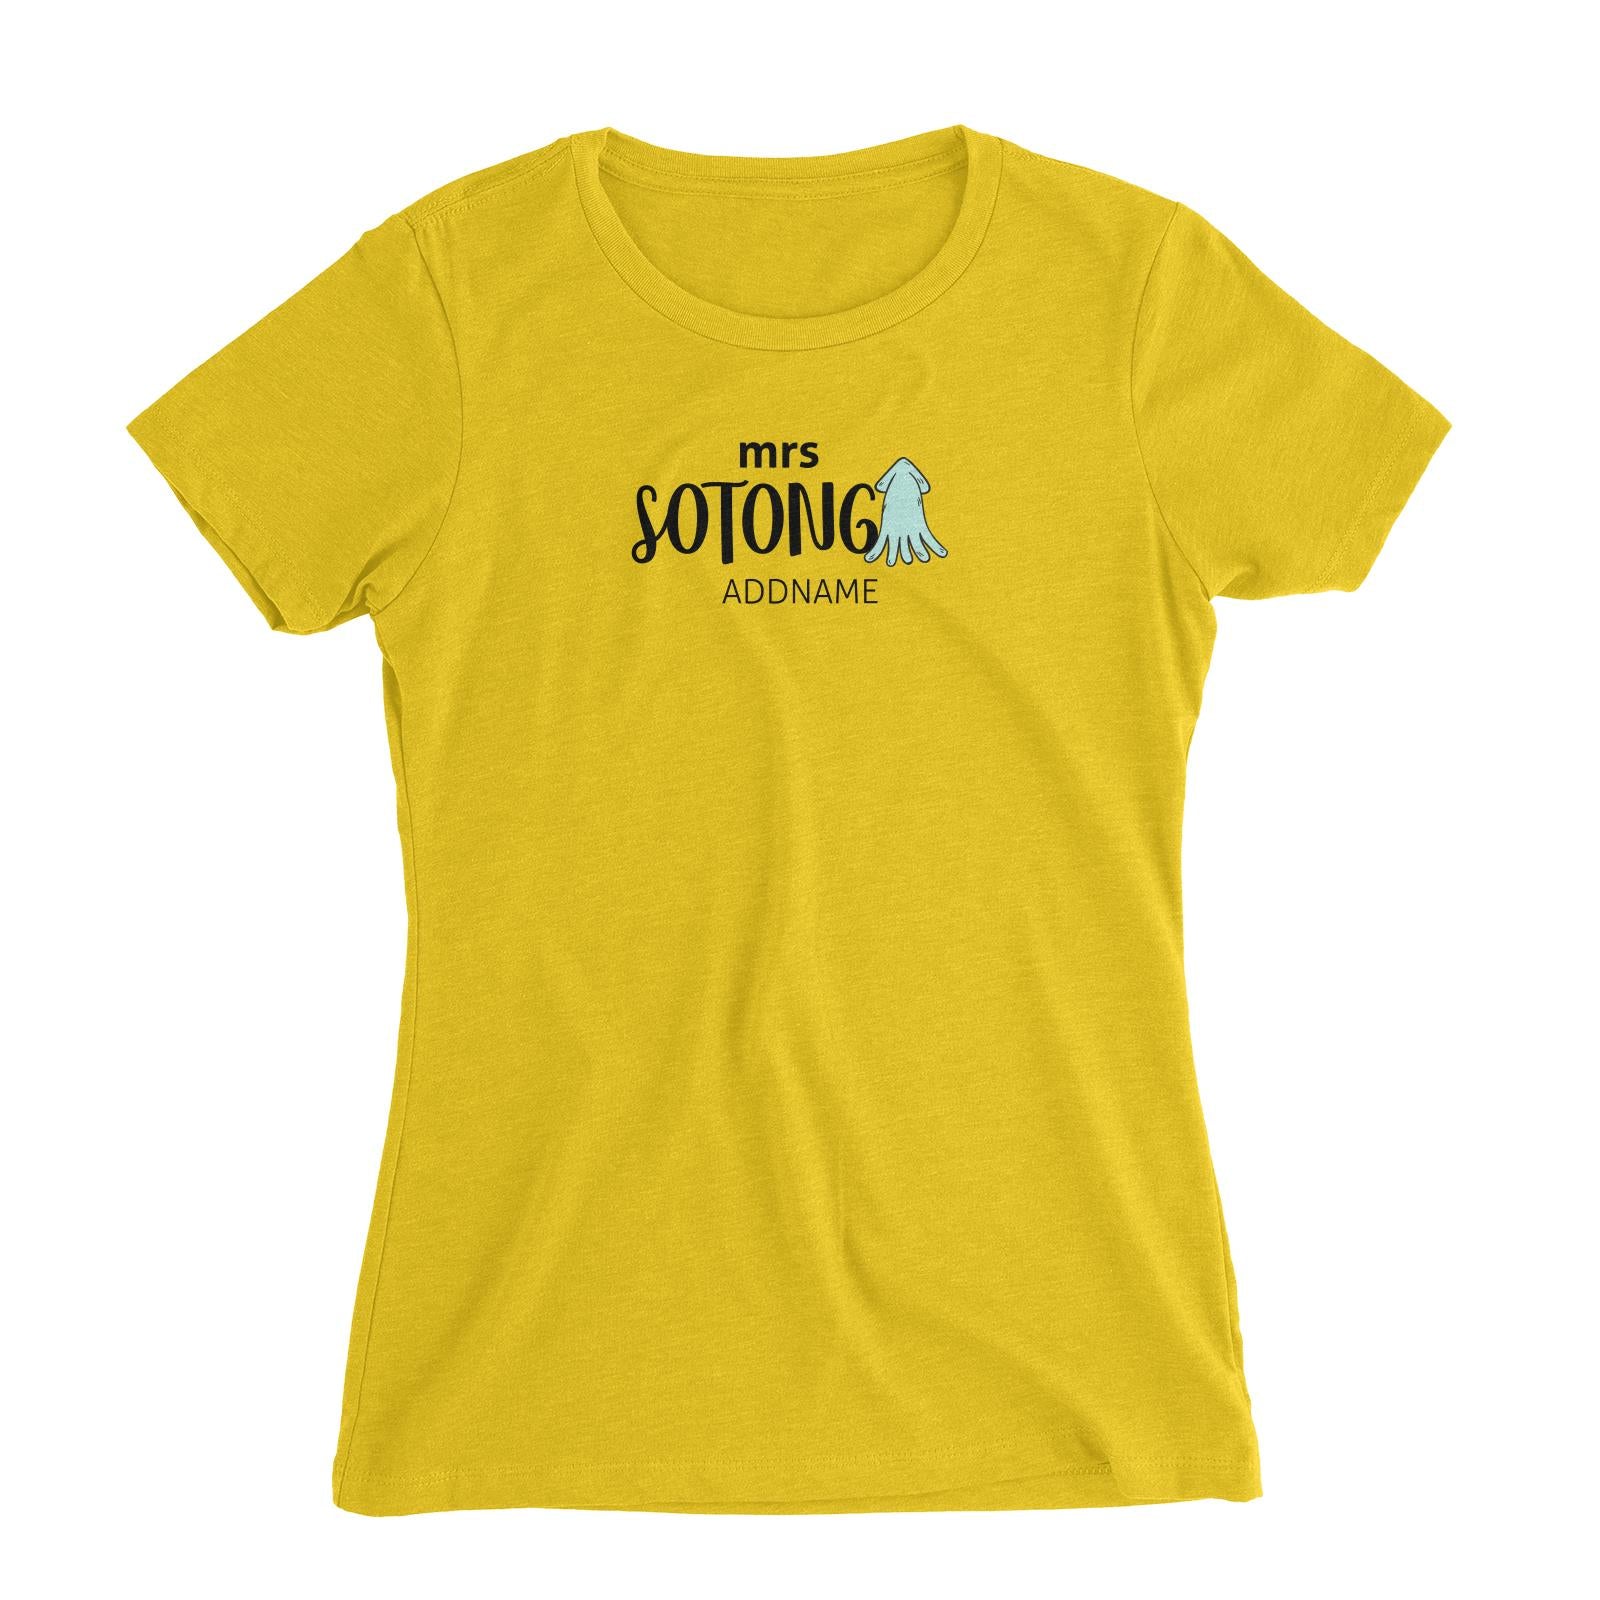 Mrs Sotong Women's Slim Fit T-Shirt